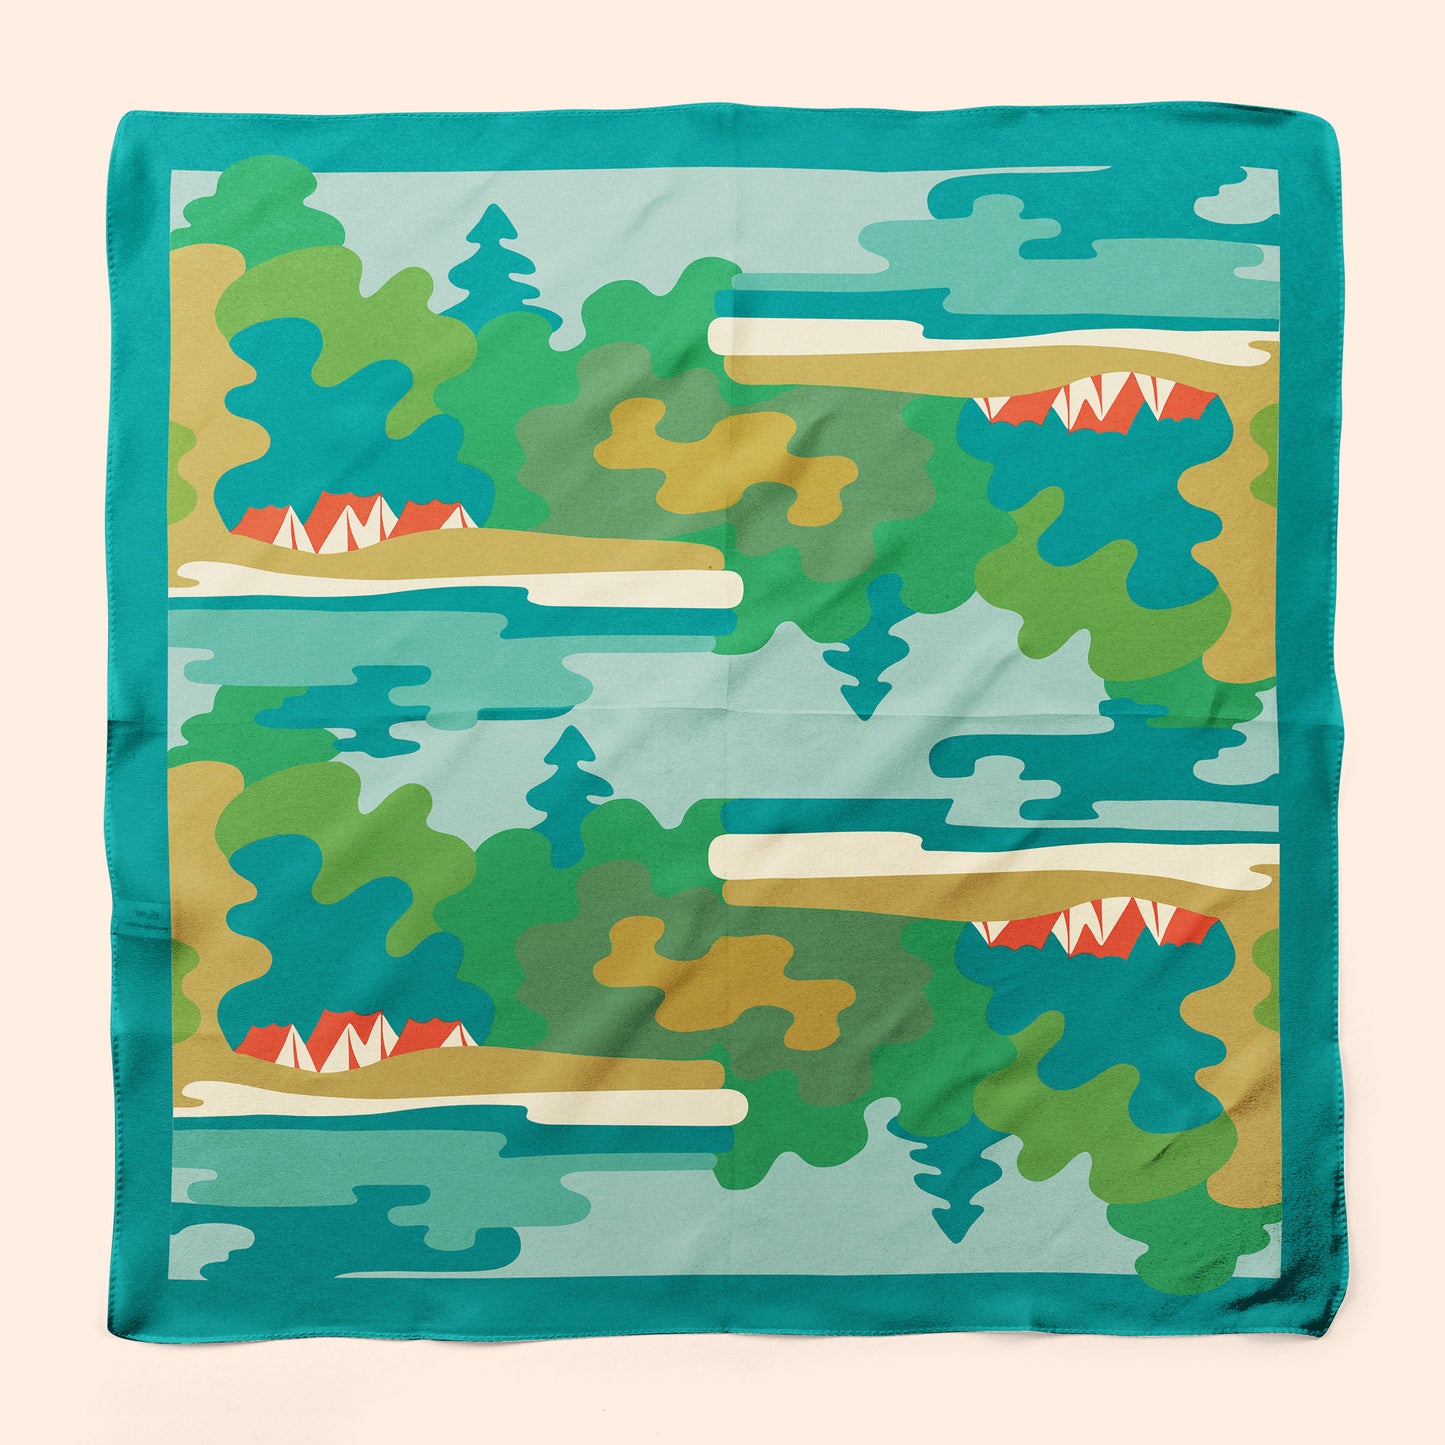 Camp -  square silk scarf